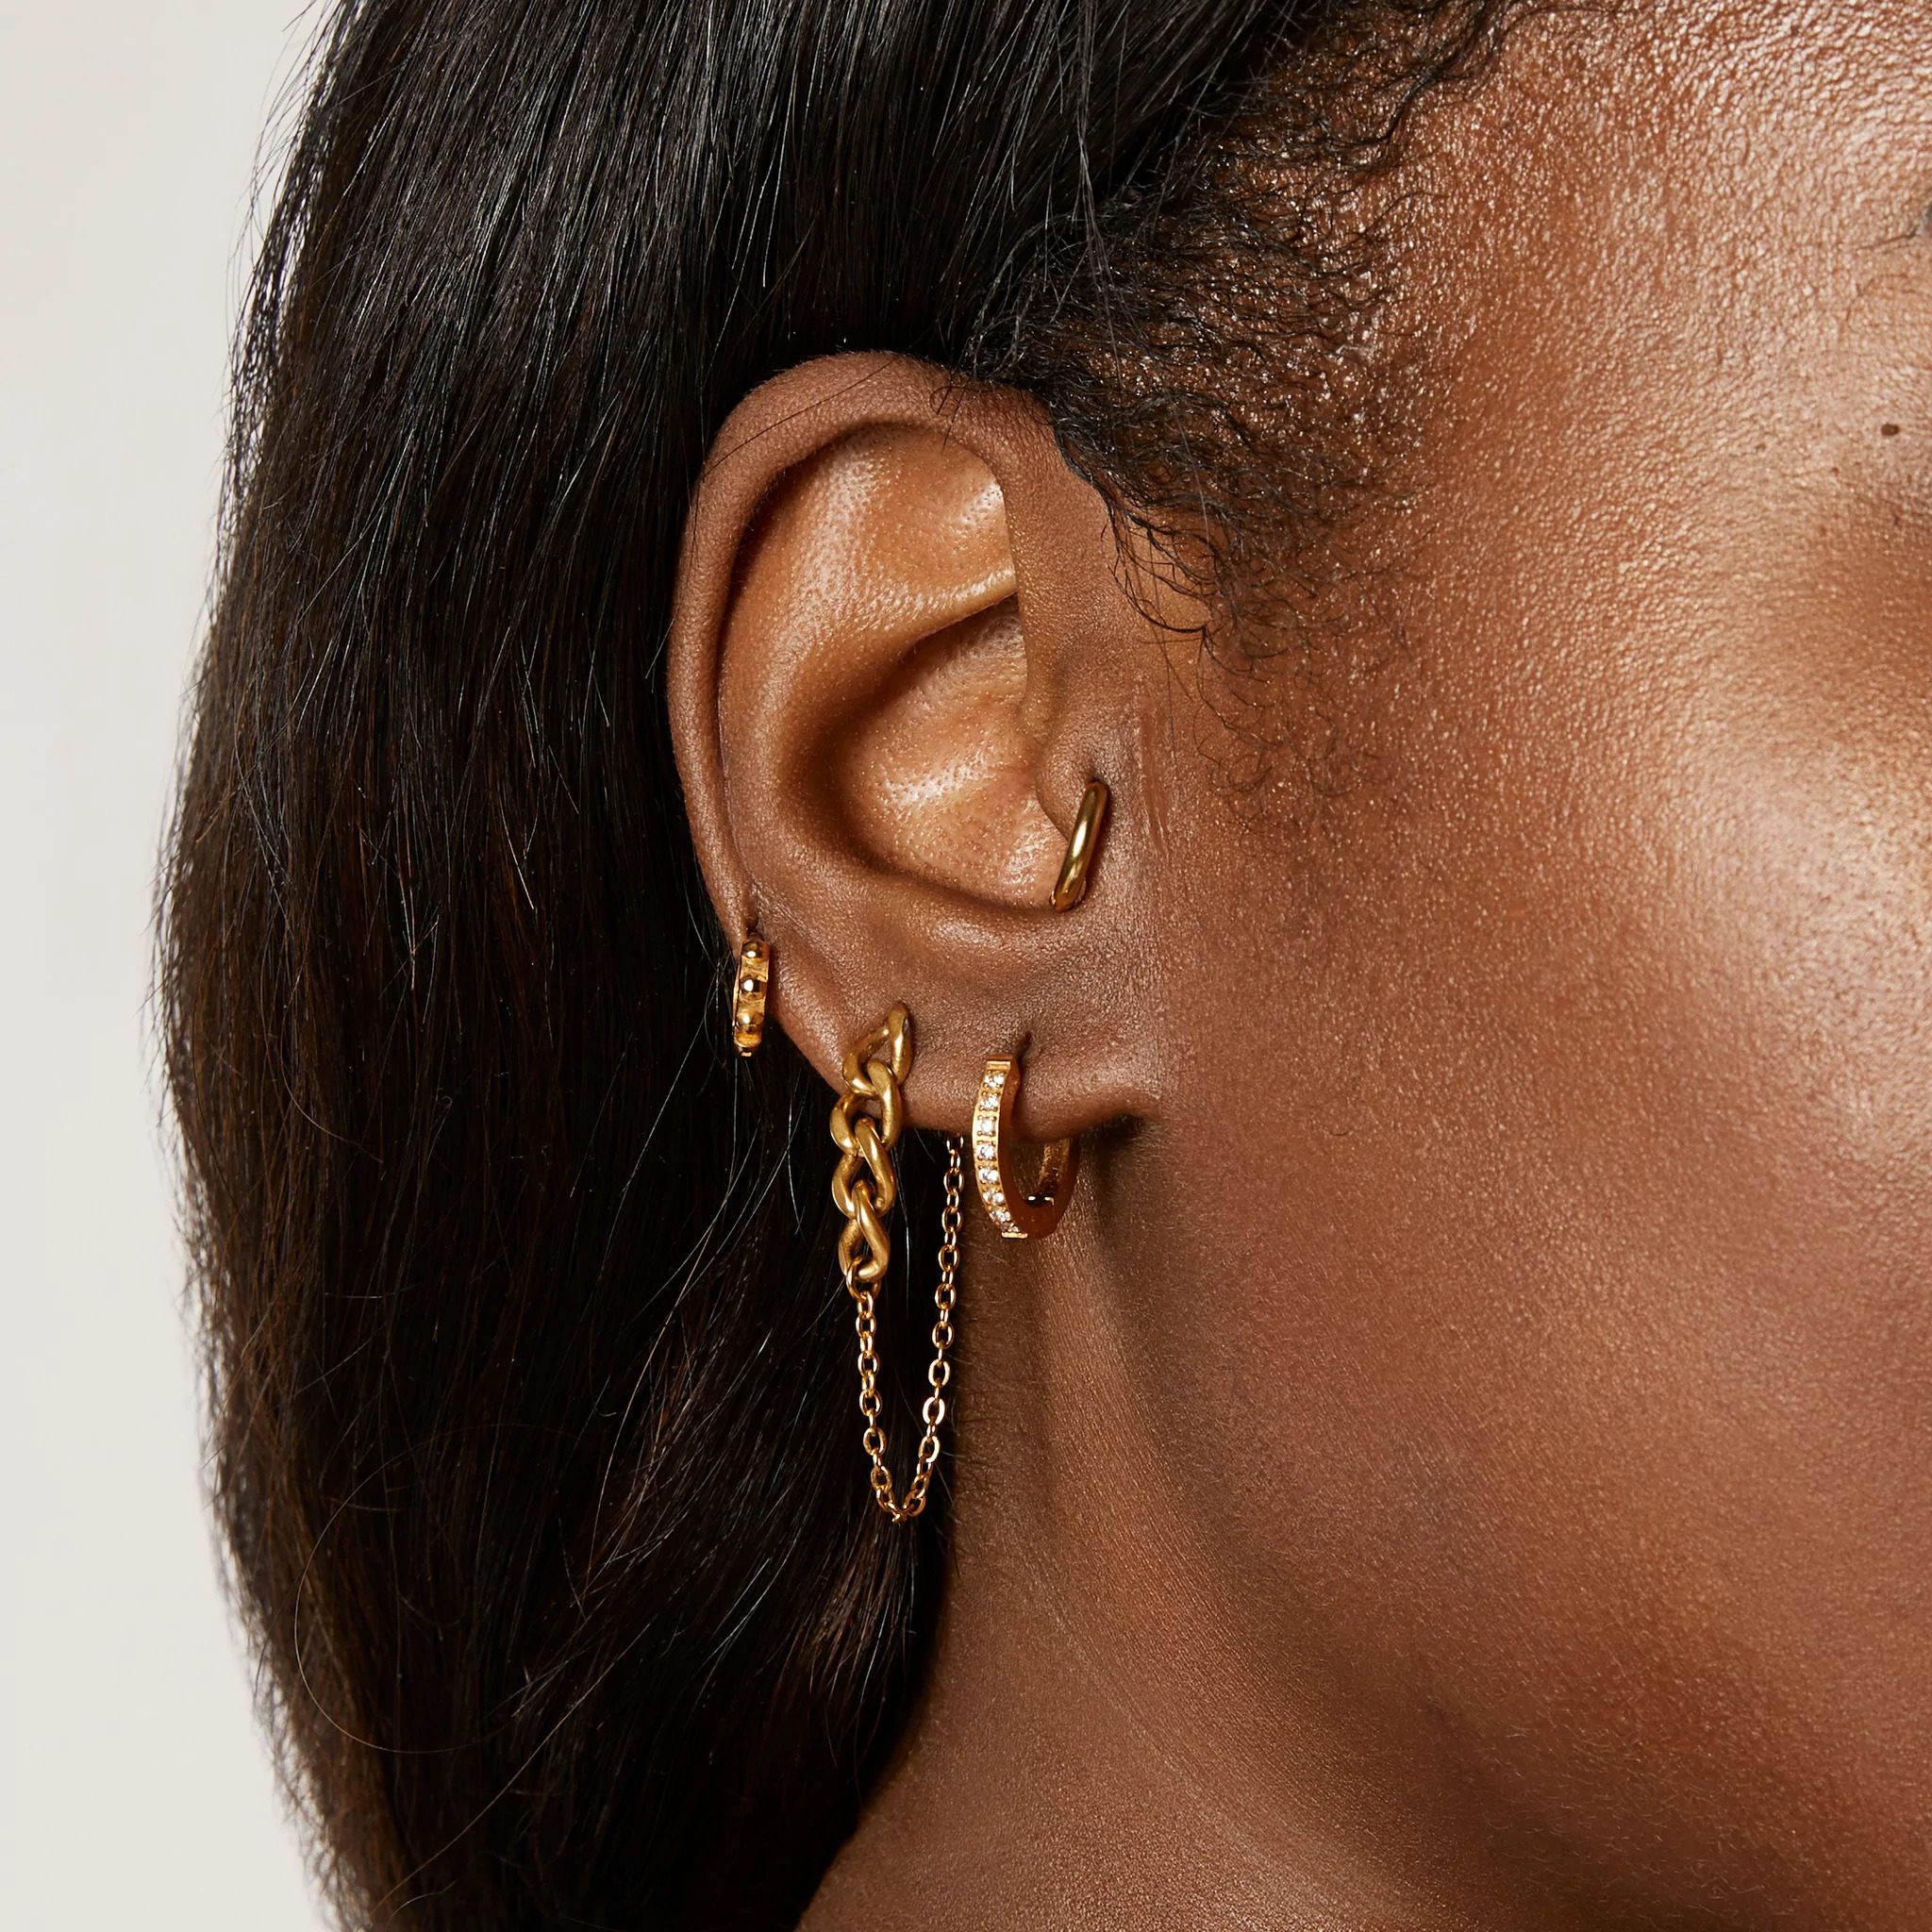 Best earrings for sensitive ears, according to expert tips